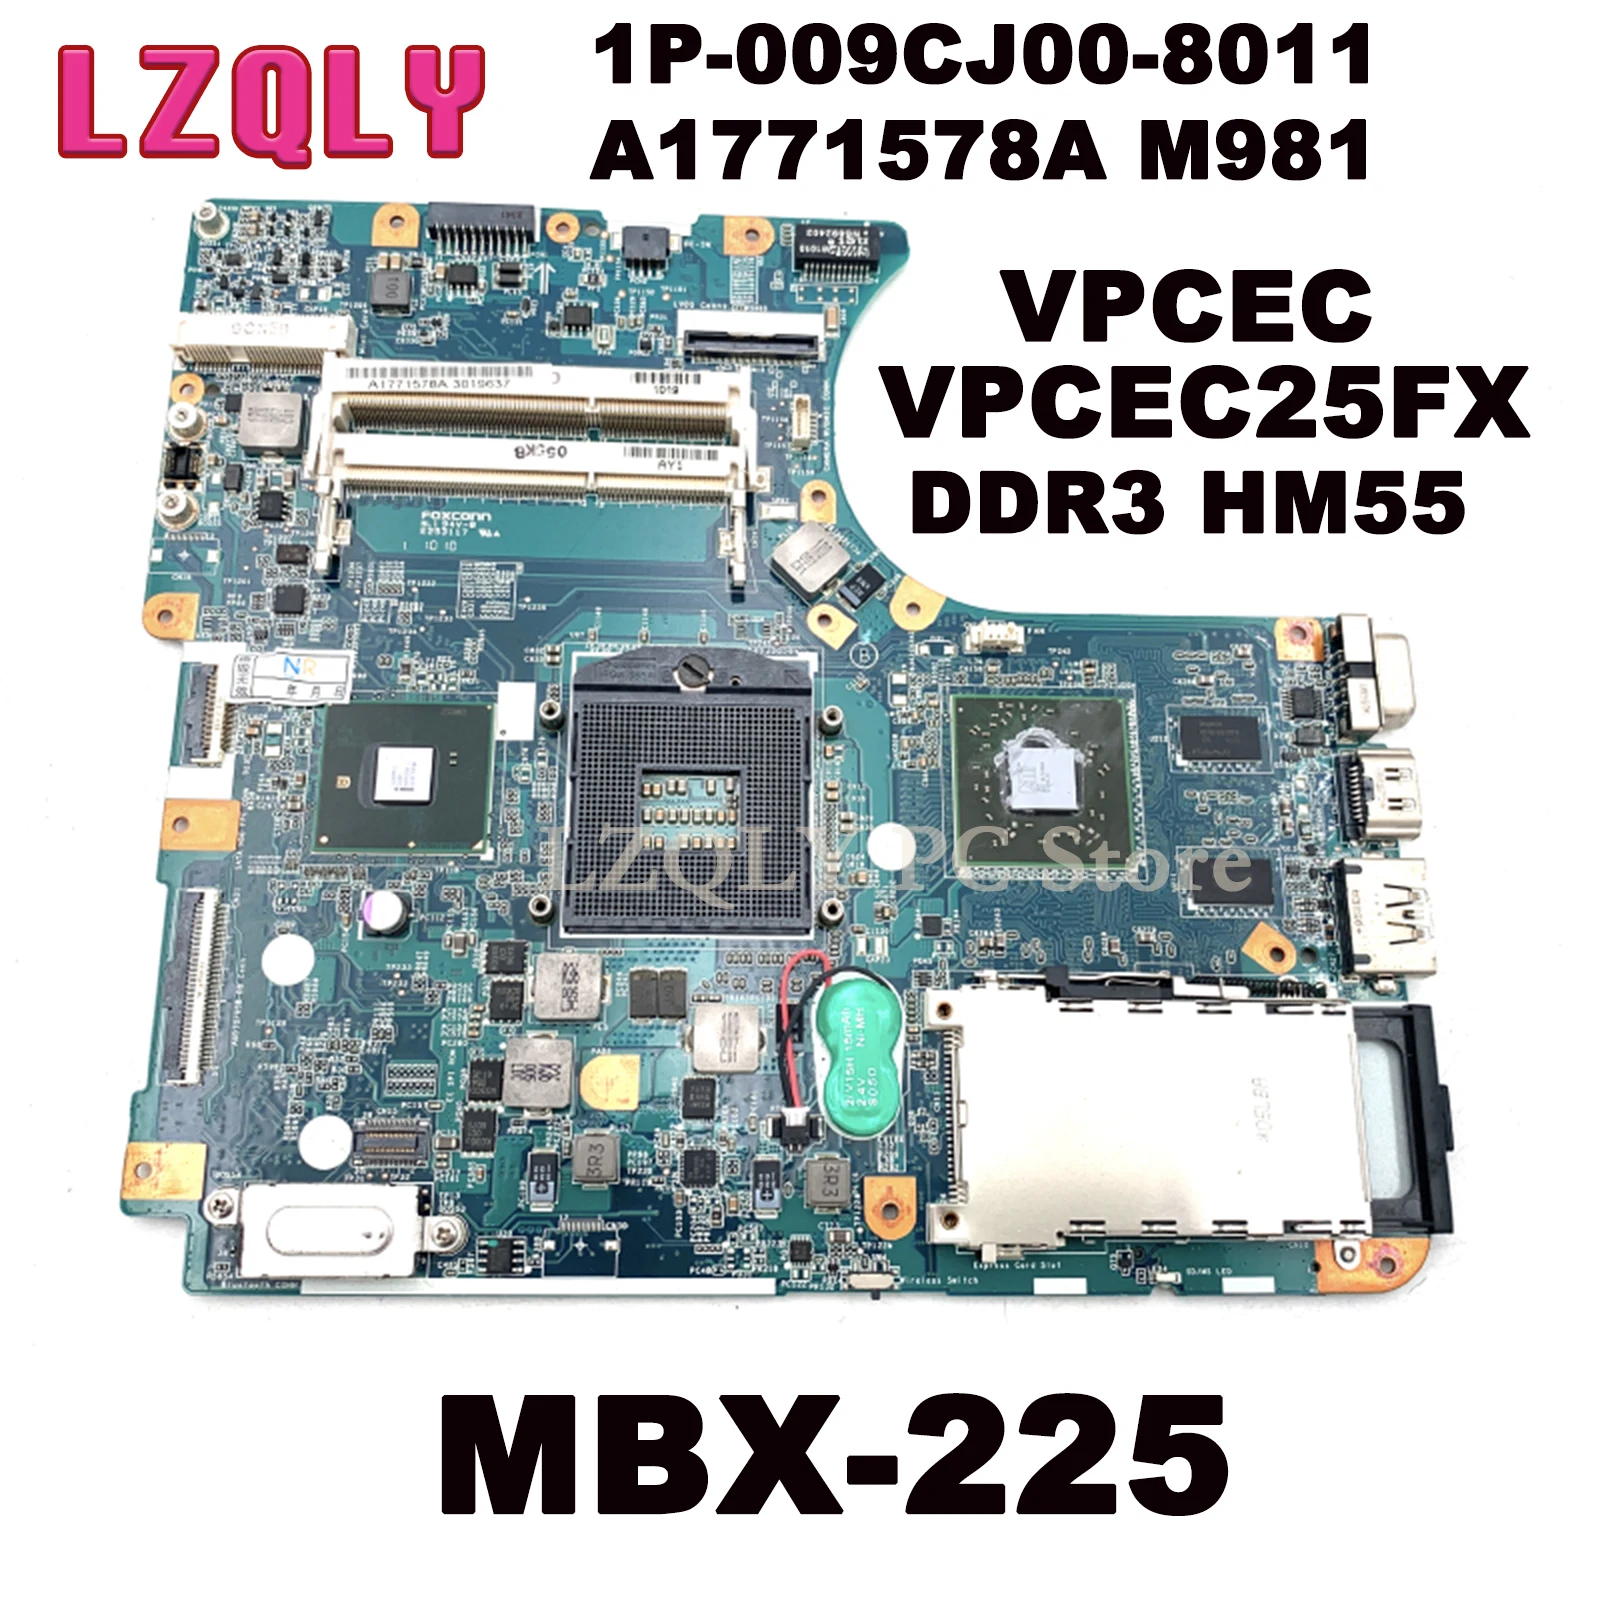 LZQLY For Sony VPCEC VPCEC25FX 1P-00CJ00-8011 A1771578A MBX-225 Laptop MotherboardM981 DDR3 HM55 Free CPU